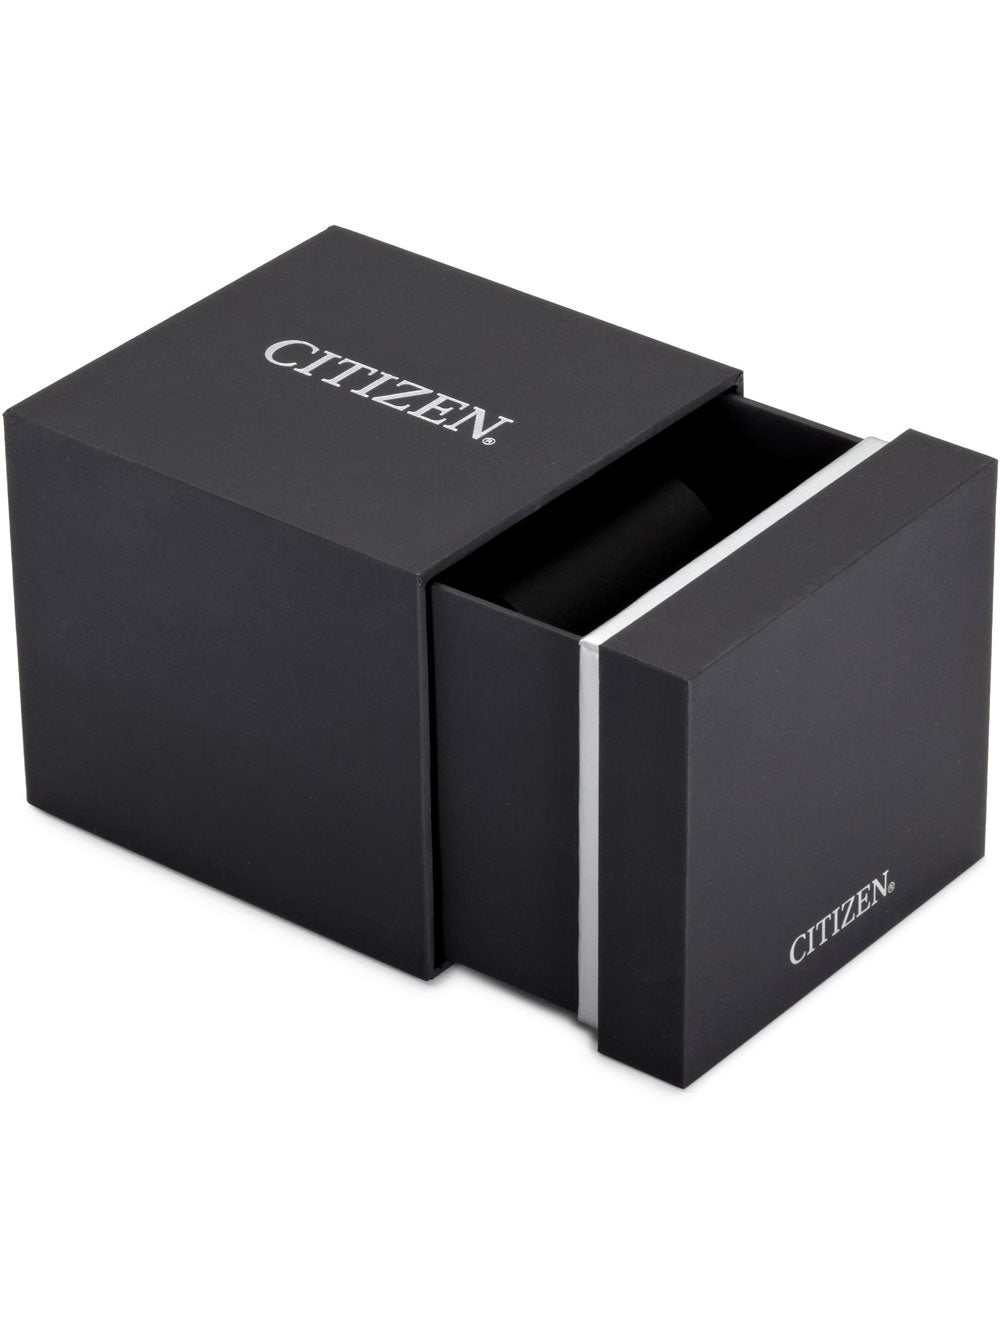 Citizen Eco Drive Chronograph AT8154-82L 42mm 10ATM